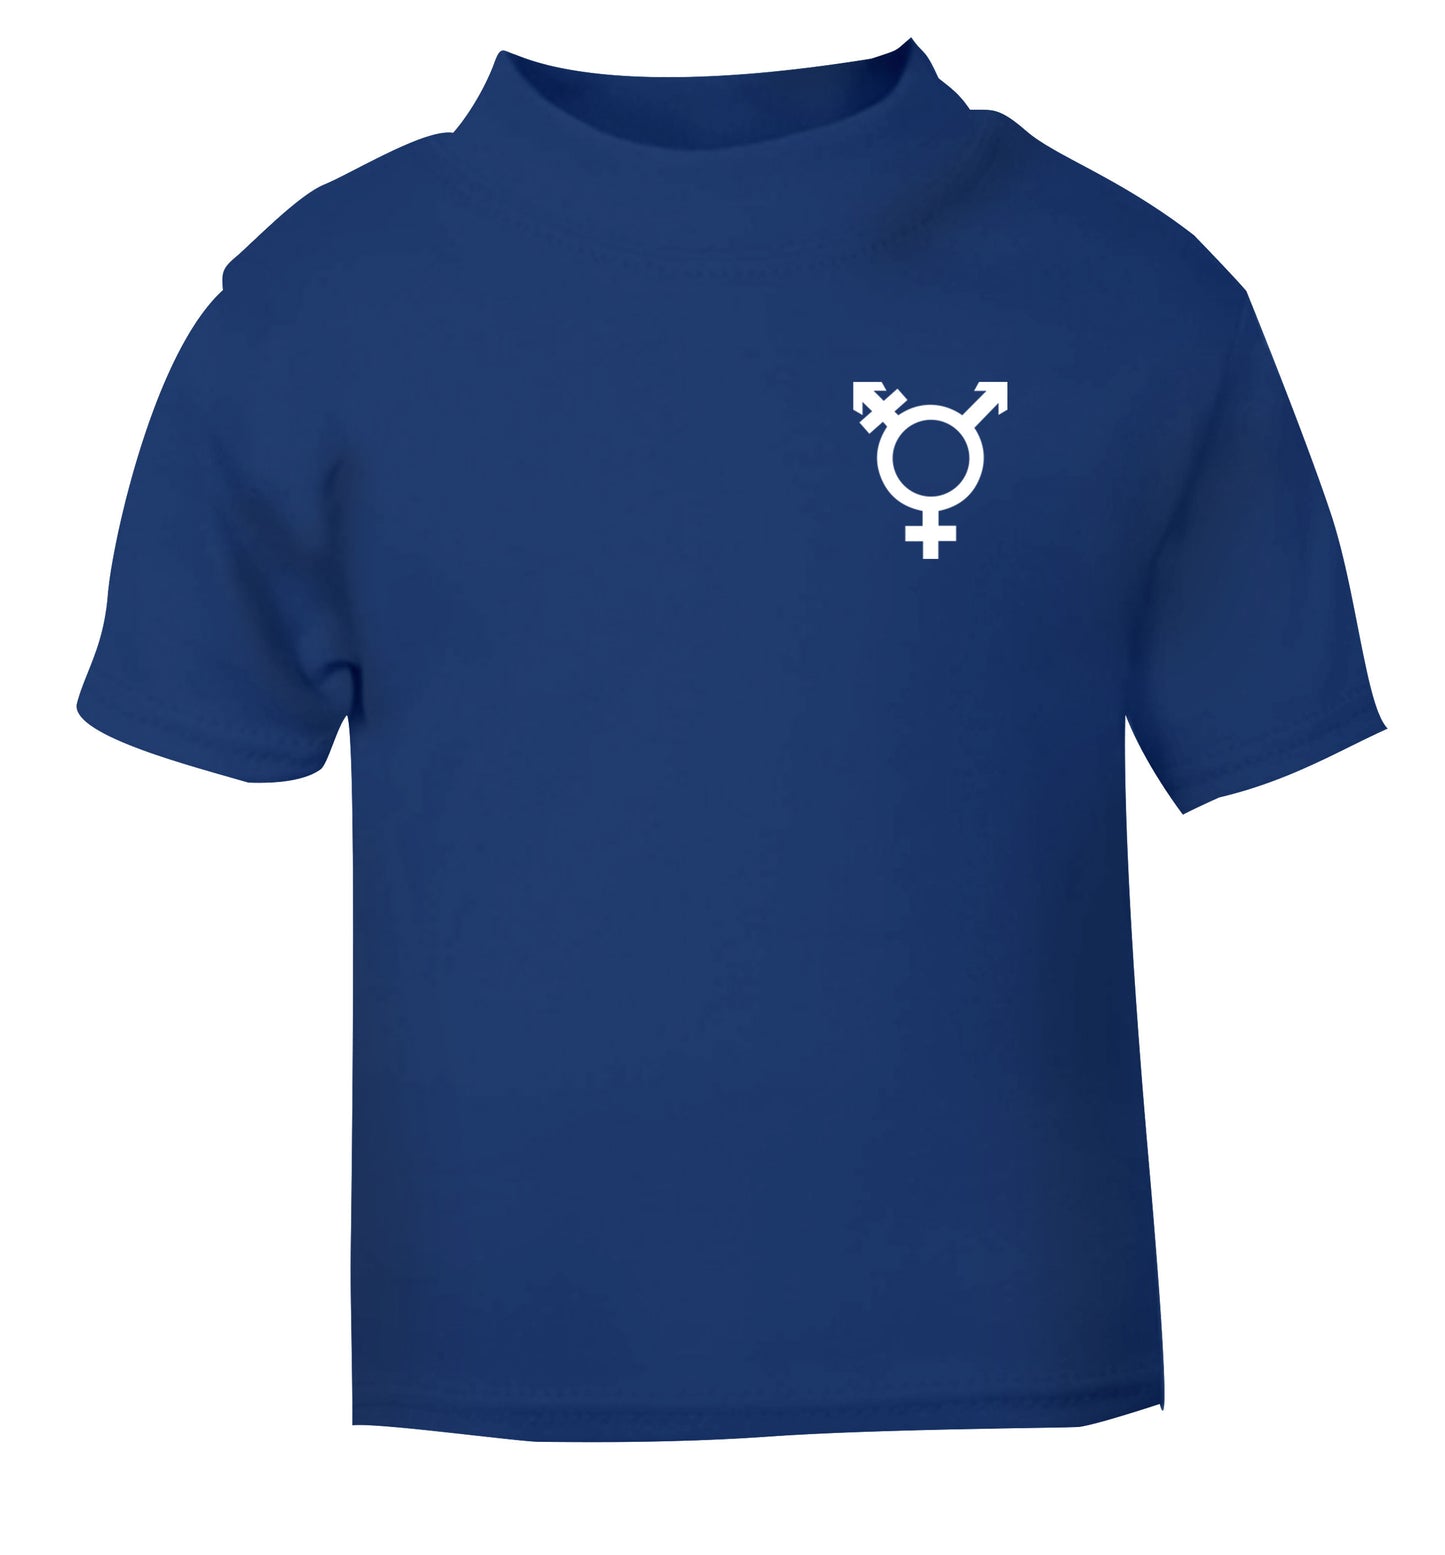 Trans gender symbol pocket blue Baby Toddler Tshirt 2 Years